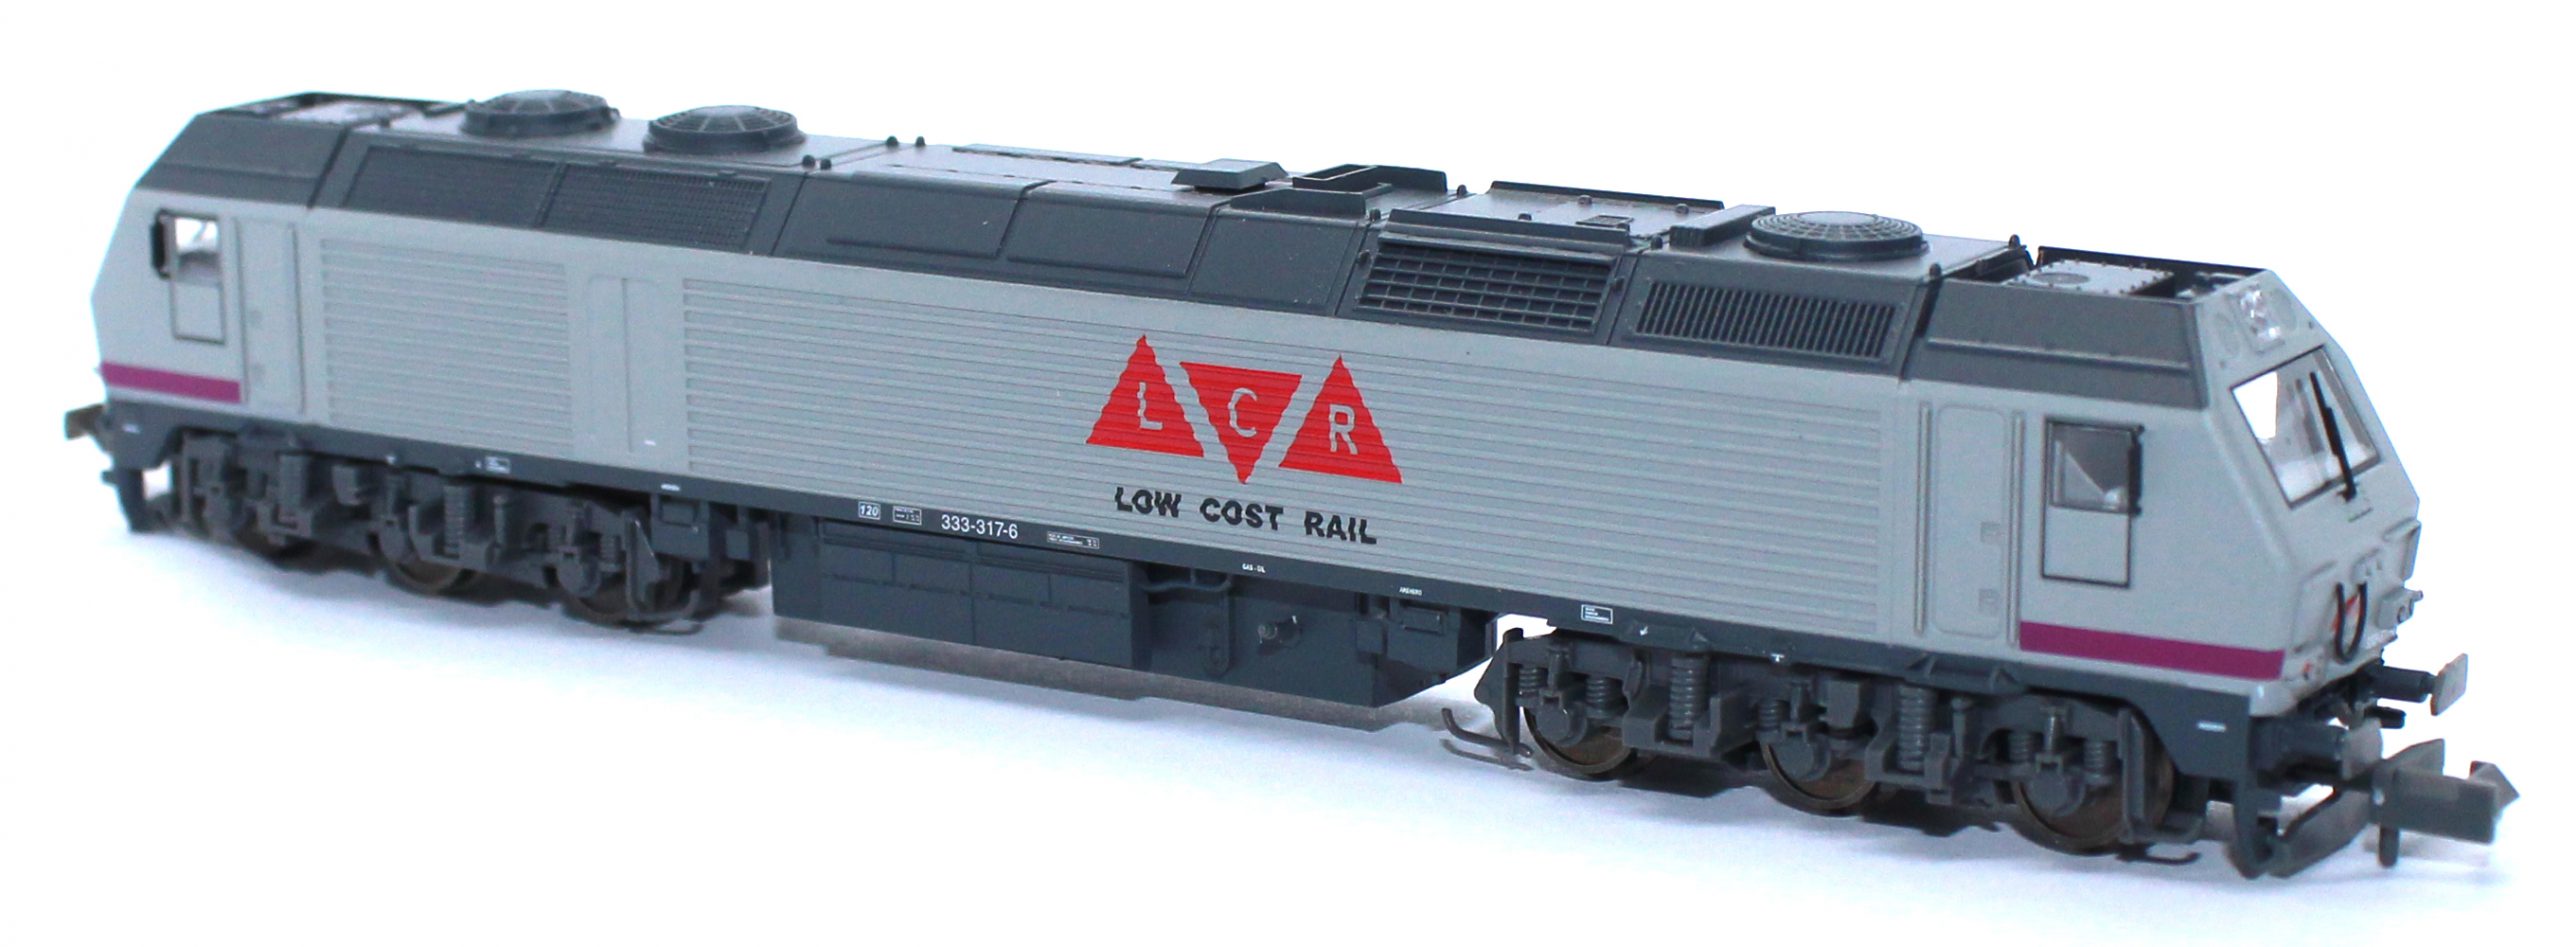 Mftrain – Locomotora 333.317-6, Rosco, Low Cost Rail, Analogica, Escala N, Ref: N13352.